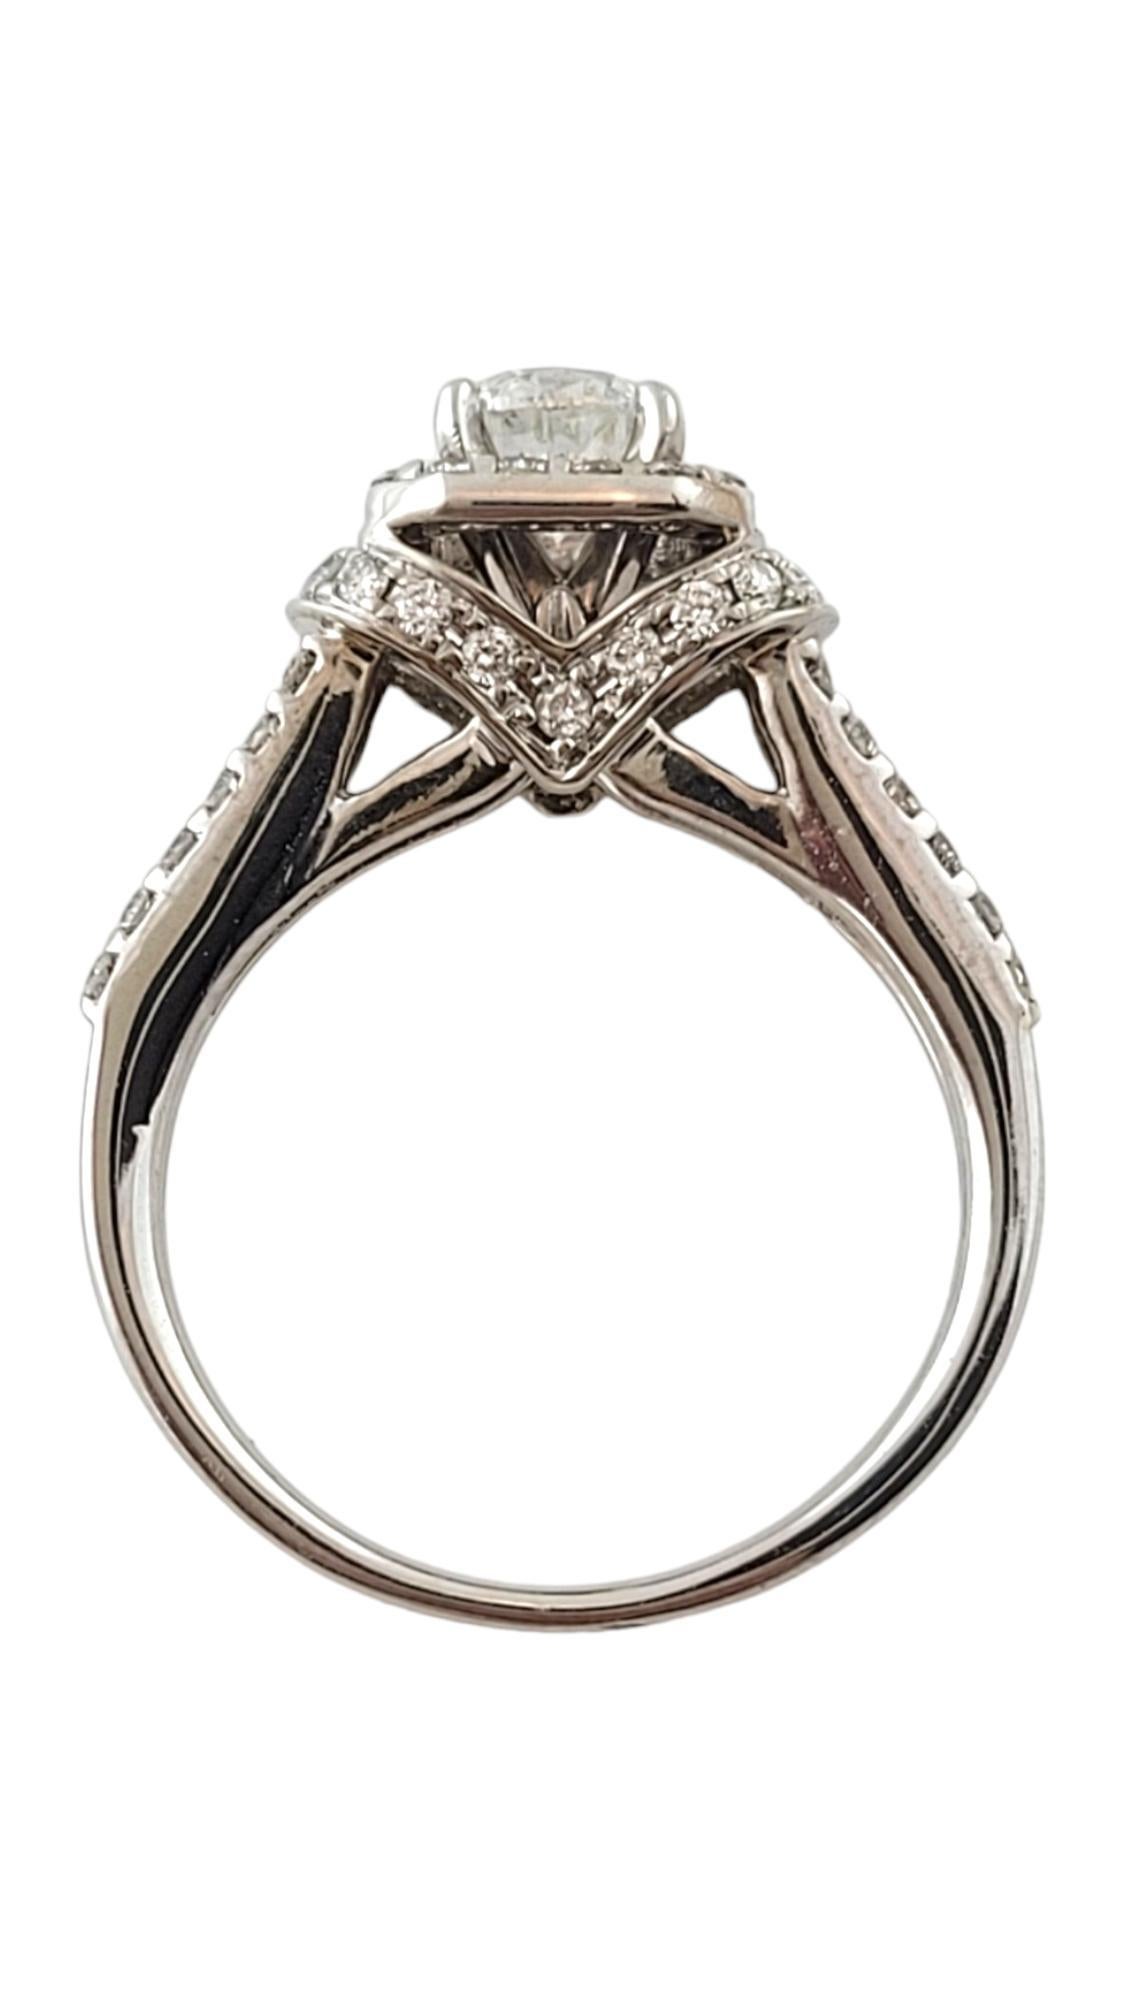 Brilliant Cut 14 Karat White Gold Diamond Engagement Ring Size 6.25 #16974 For Sale